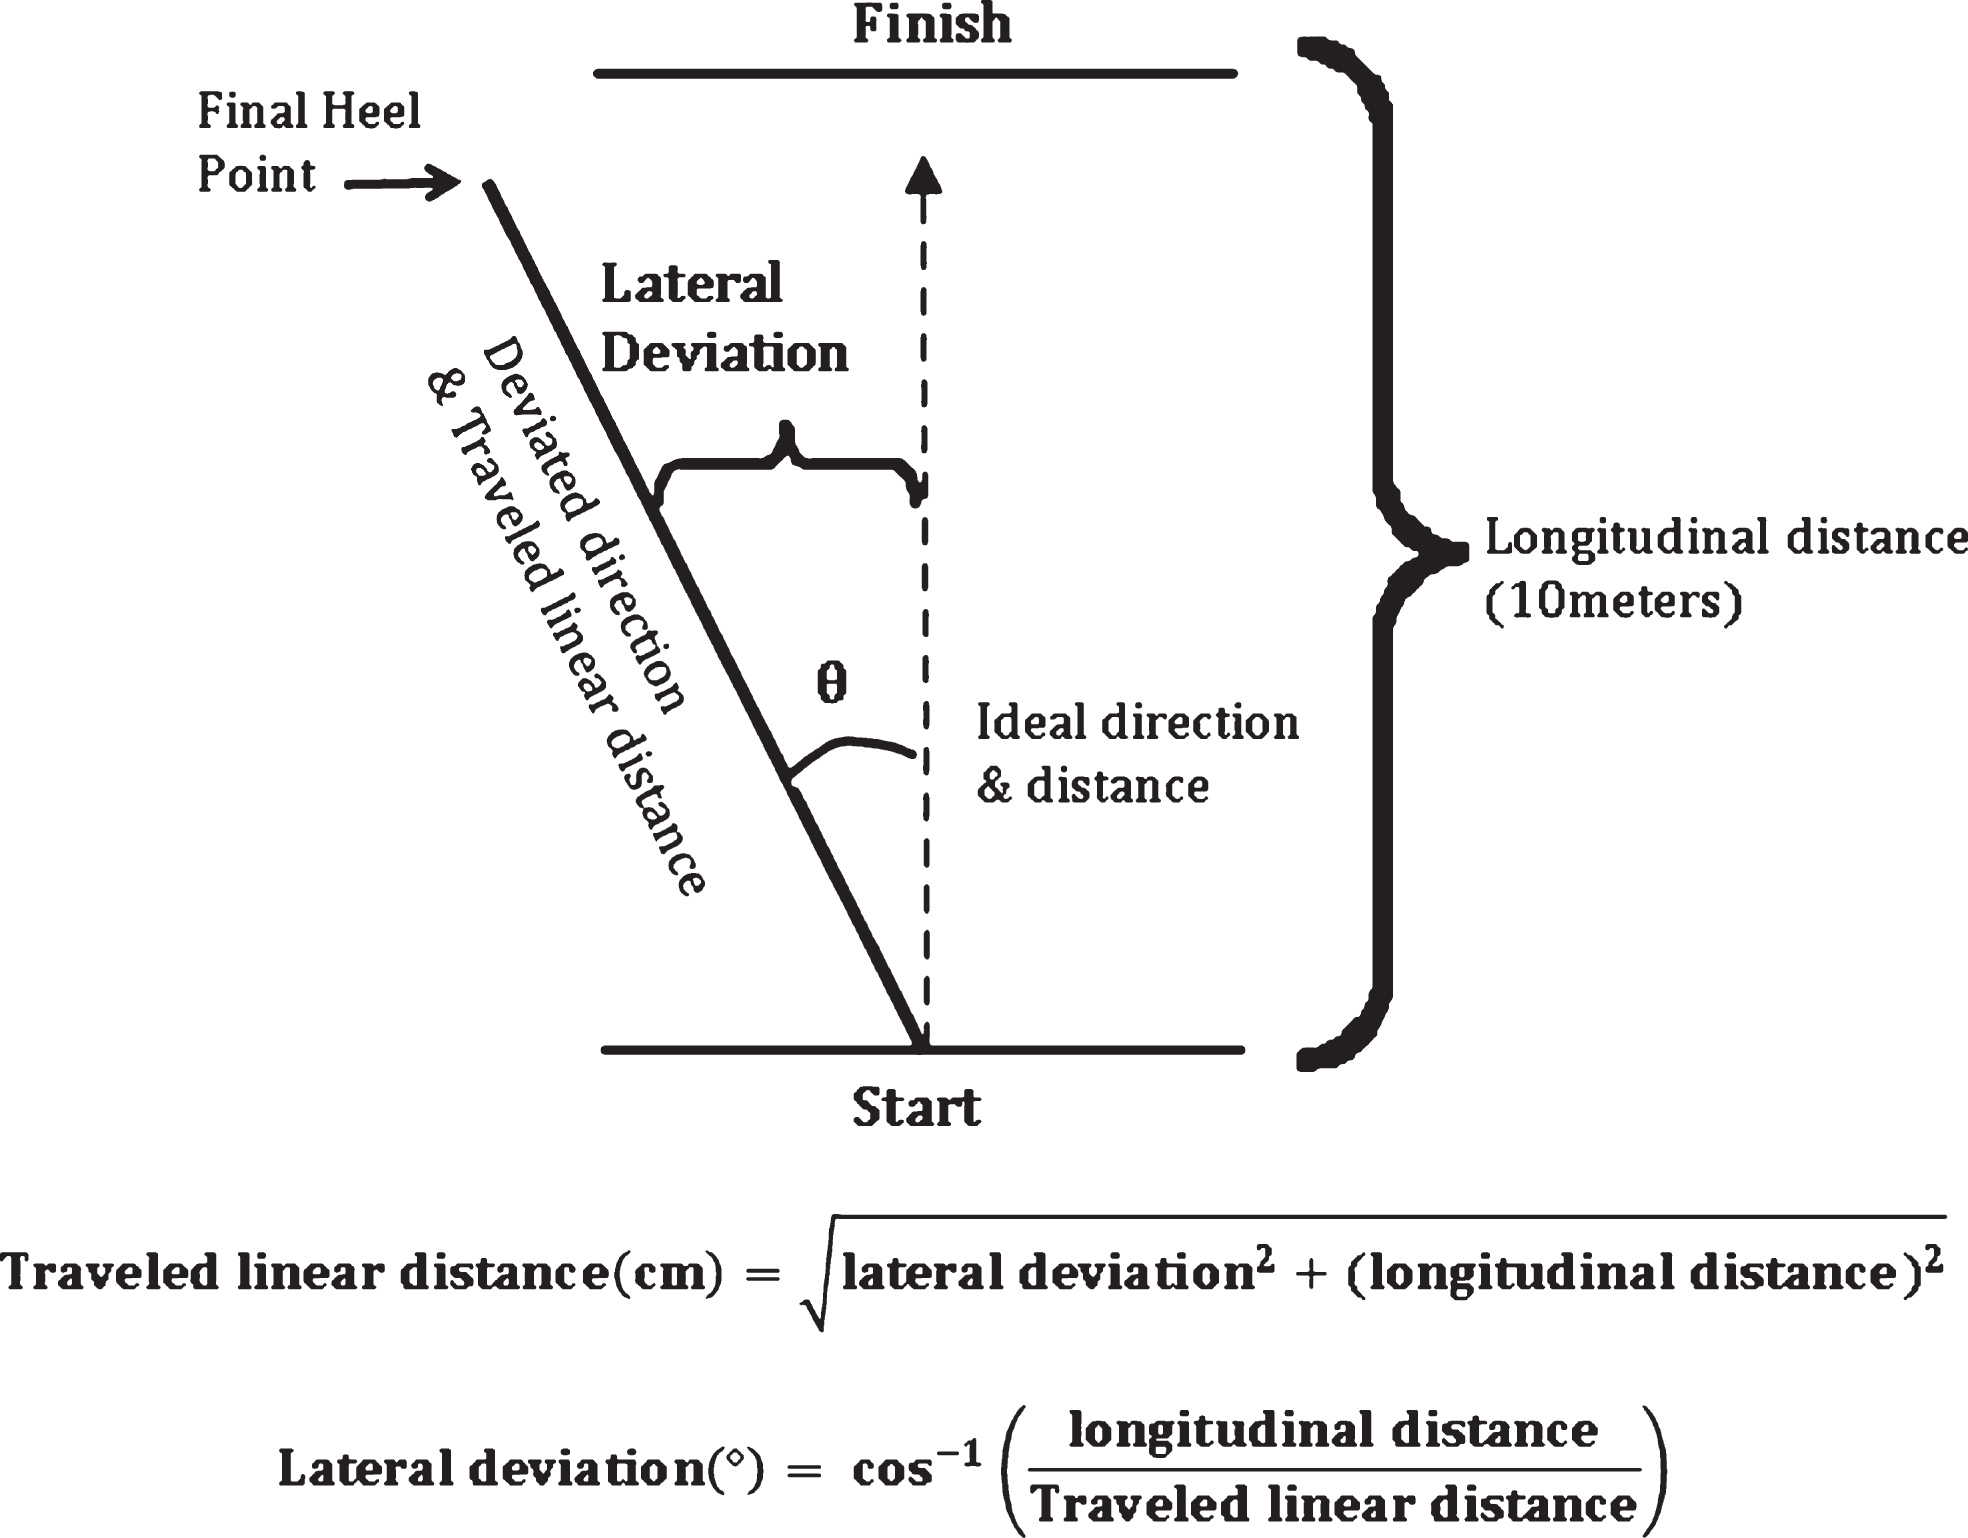 Illustration for measurement of lateral deviation.